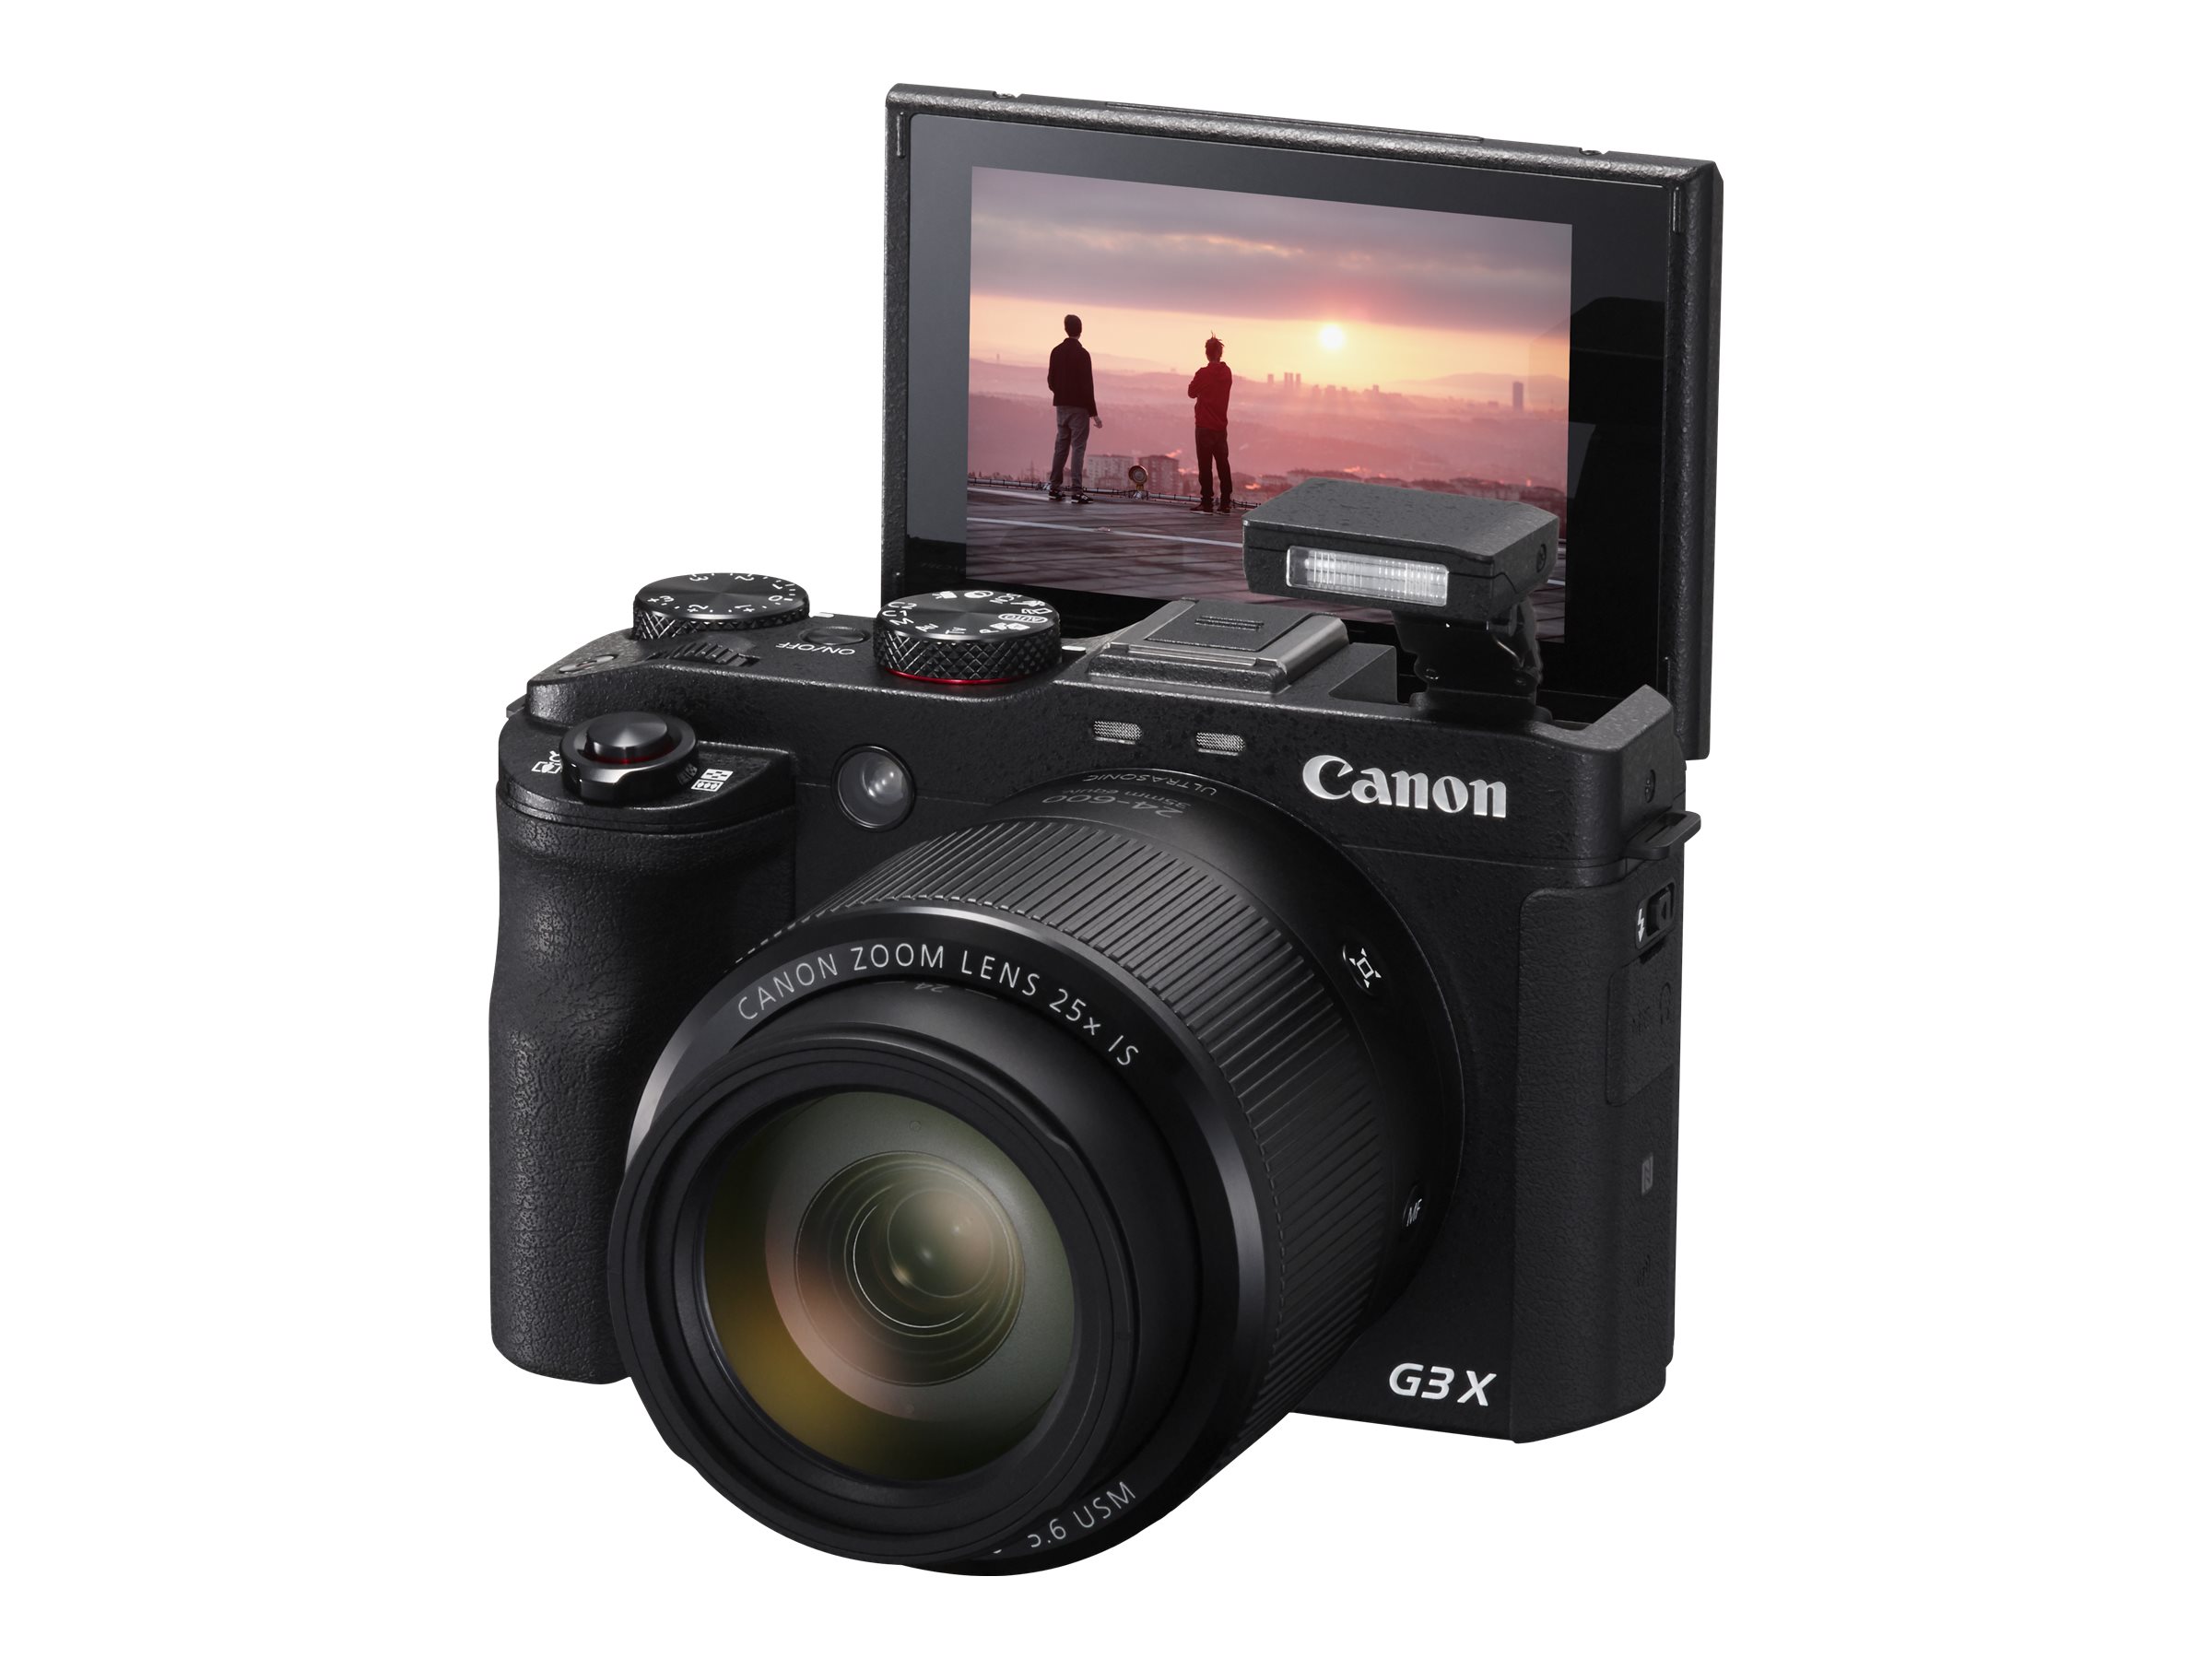 Canon PowerShot G3 X - Digital camera - compact - 20.2 MP - 1080p - 25x optical zoom - Wi-Fi, NFC - image 2 of 15